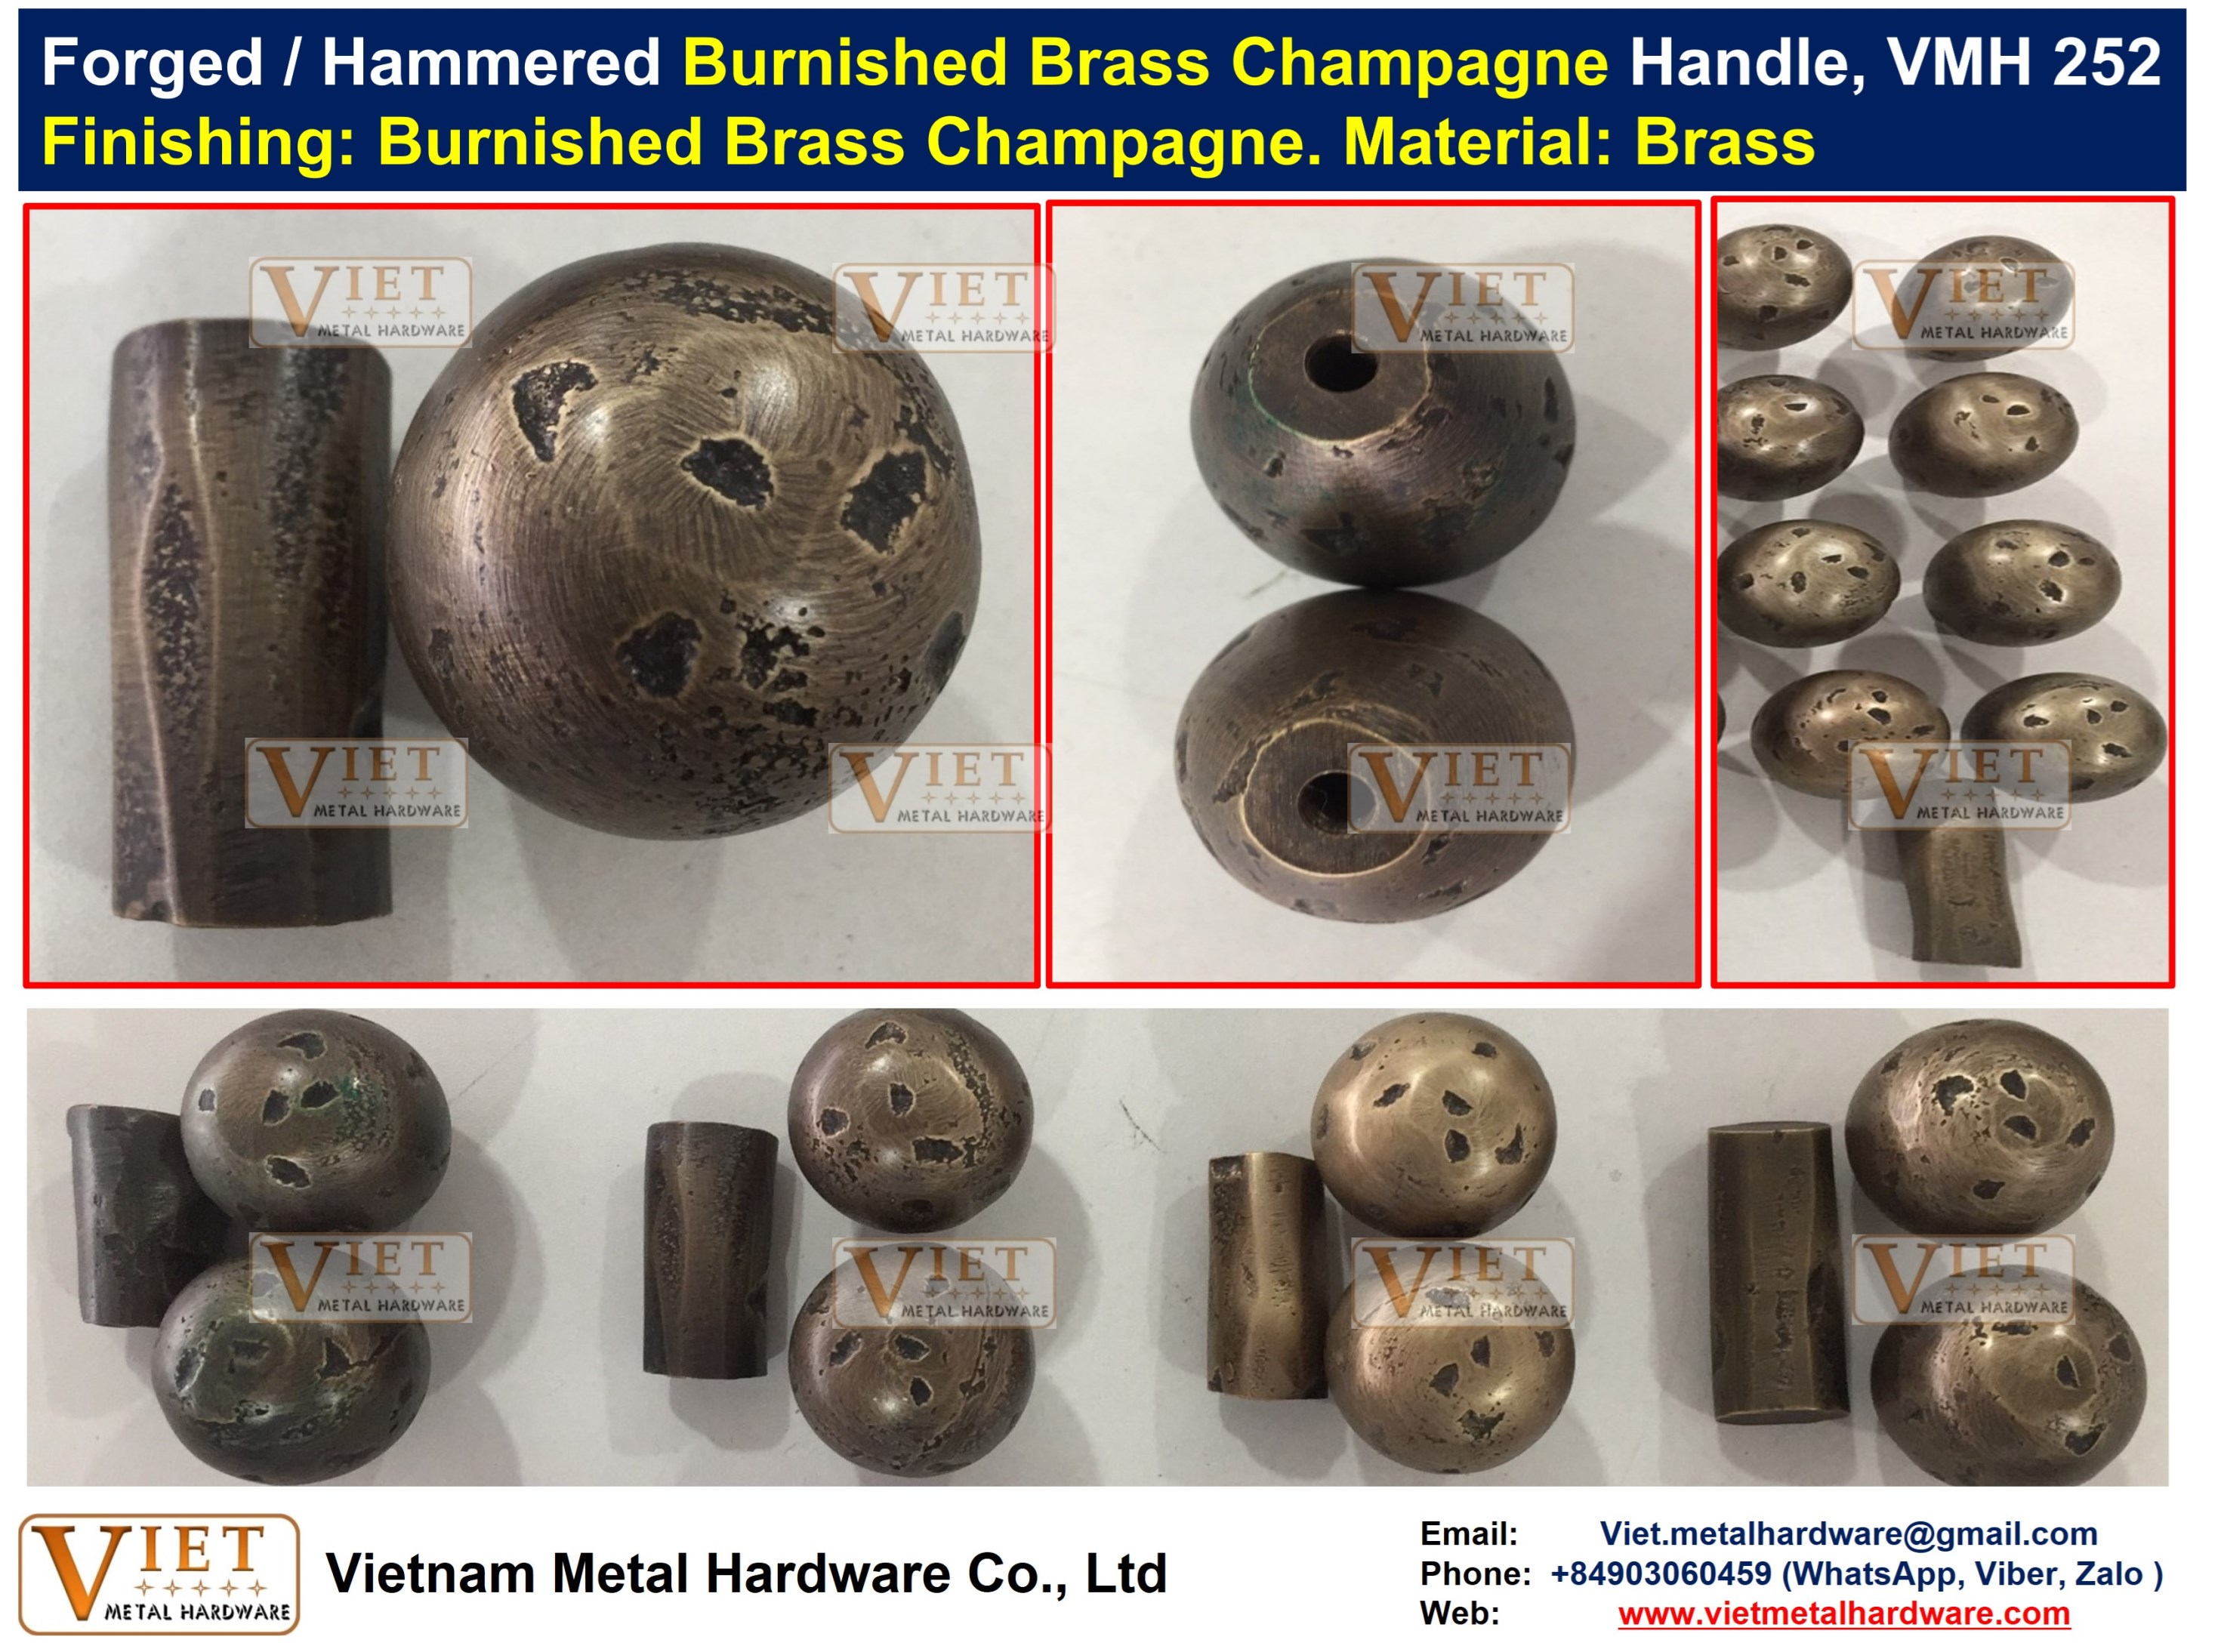 Forged / Hammered Cast Burnished Burnished Brass, Bronze, Dark Bronze,  Champagne Ball Handle - VIETNAM METAL HARDWARE CO., LTD